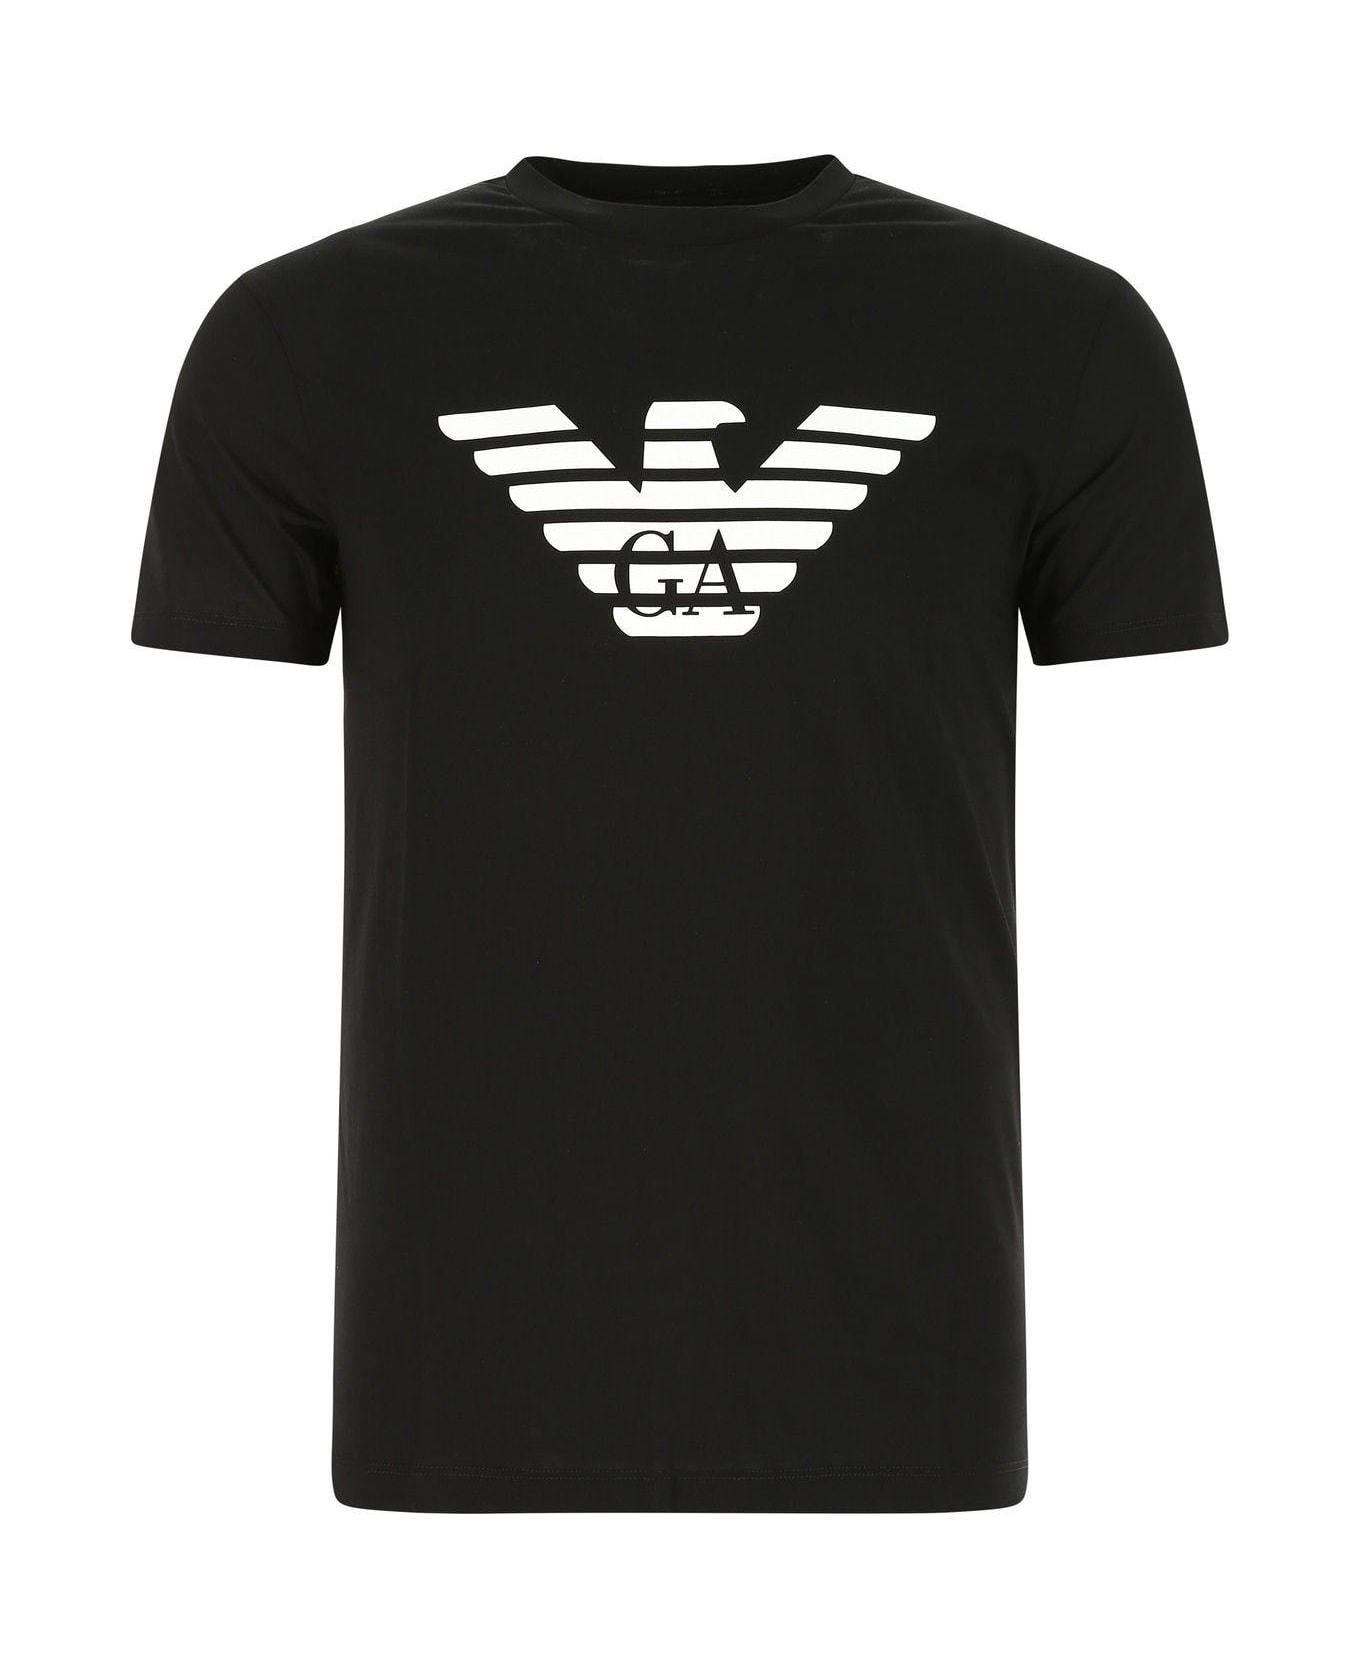 Emporio Armani Black Cotton T-shirt - Black